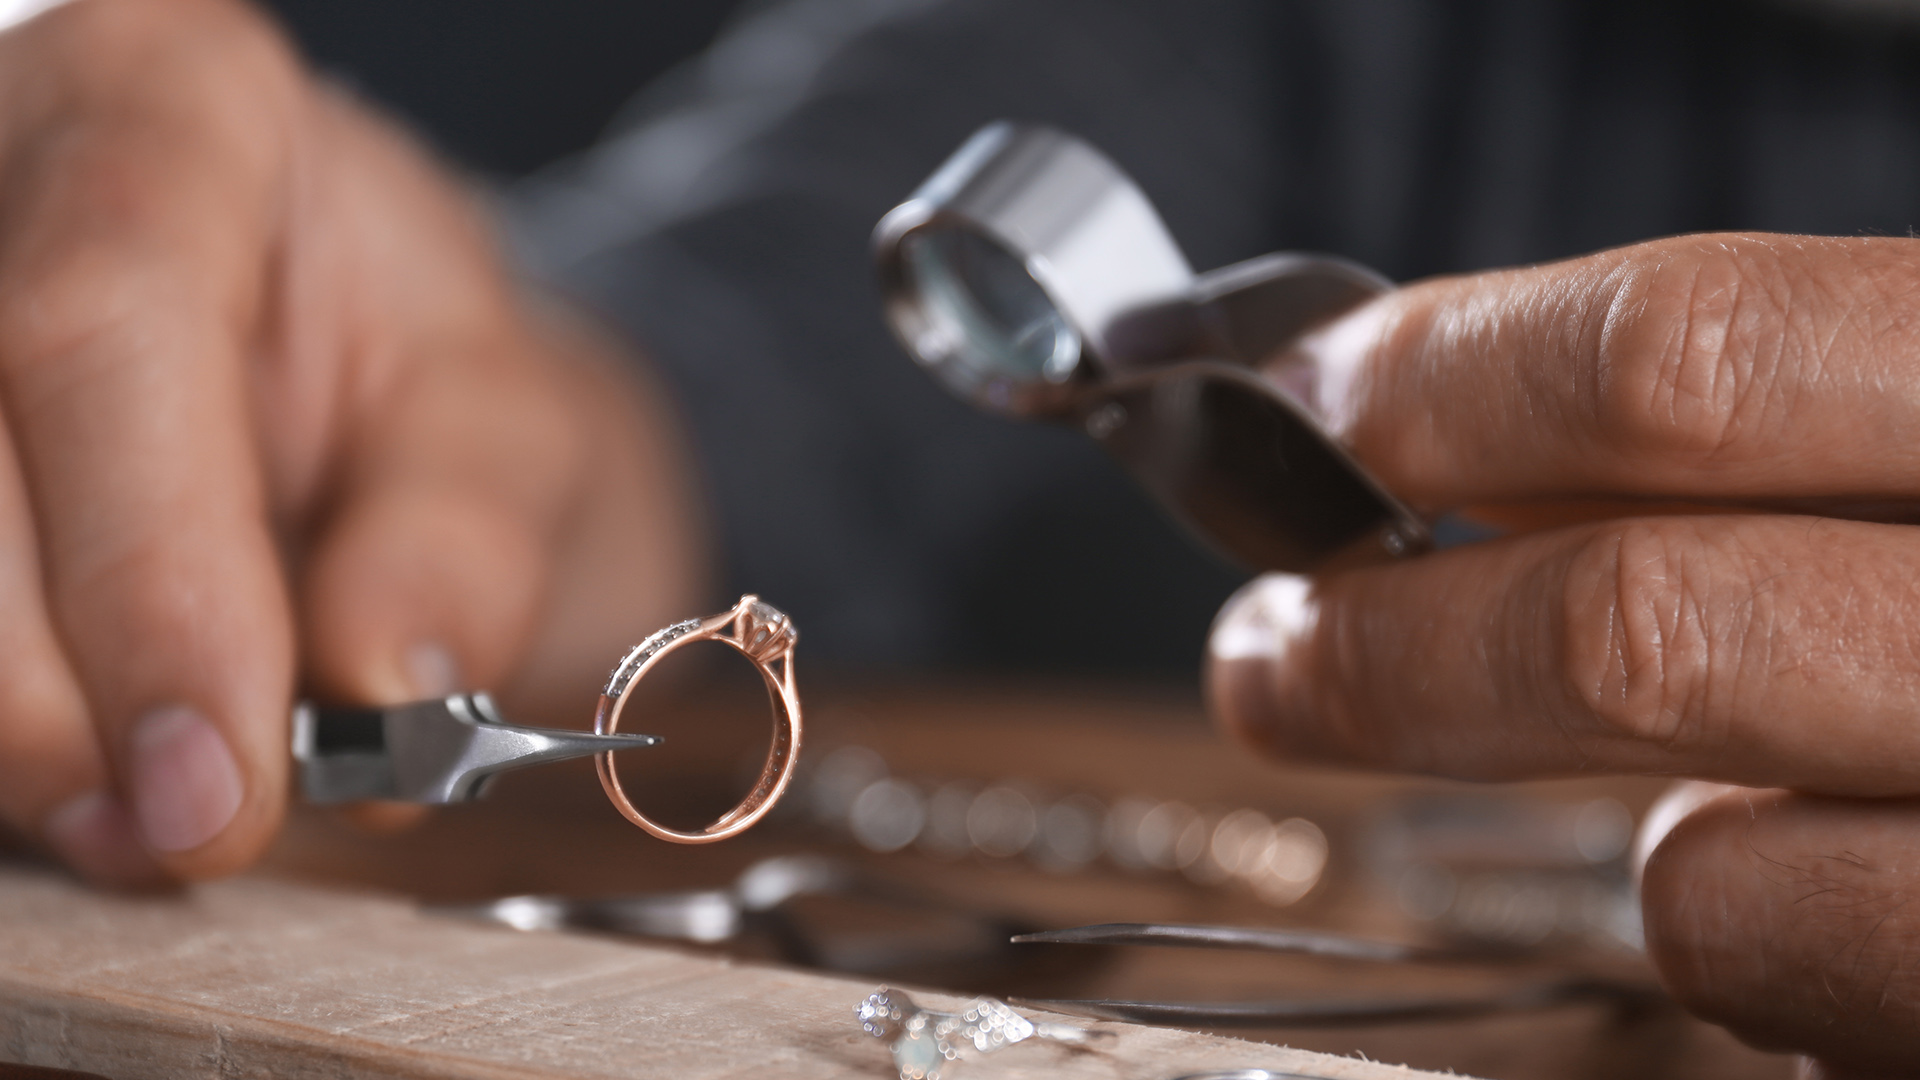 Benchjewellery services jewellery repair